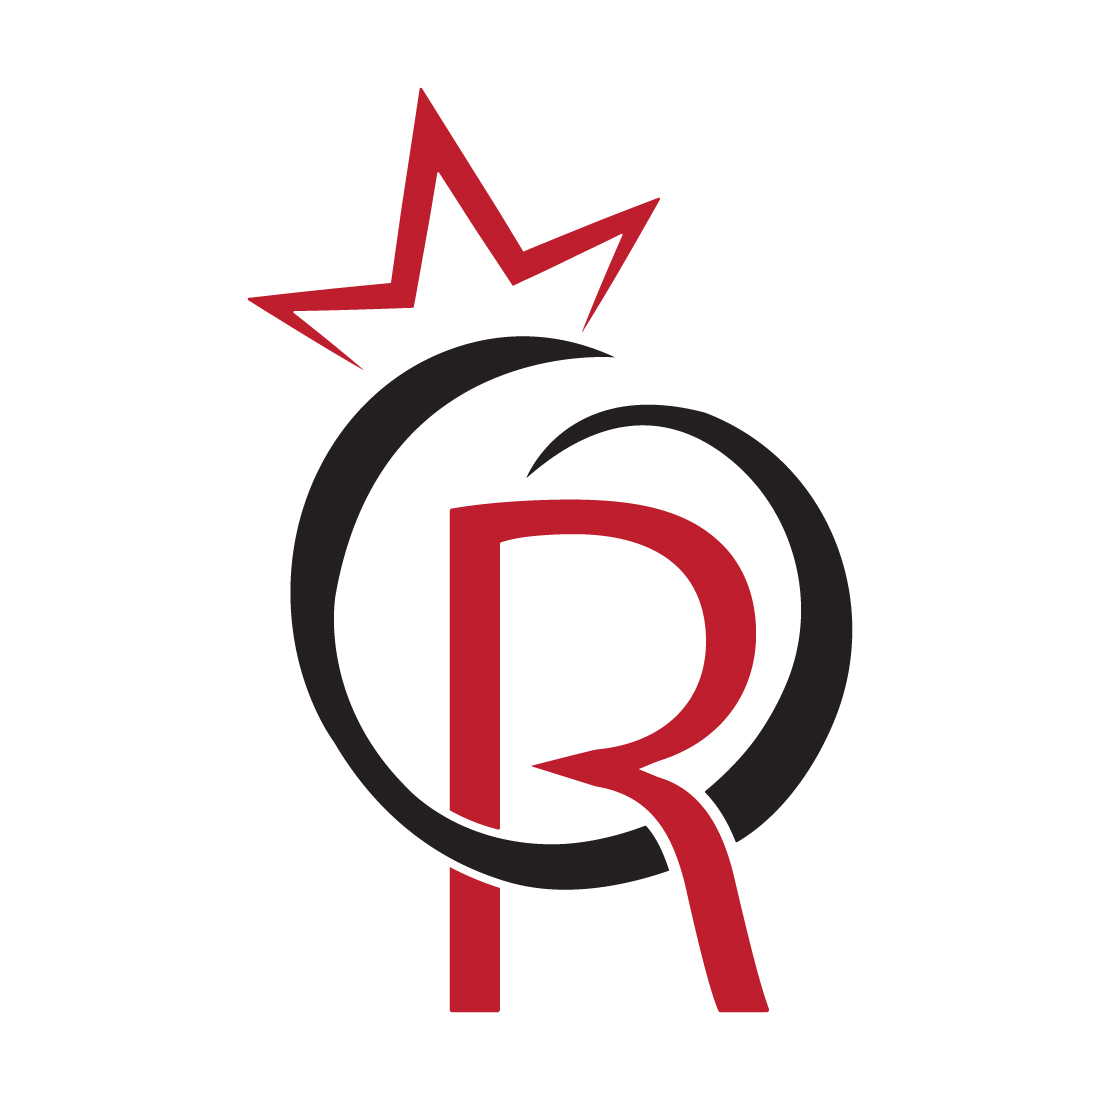 Luxury R Crown logo design R letters logo design R logo iconic design preview image.